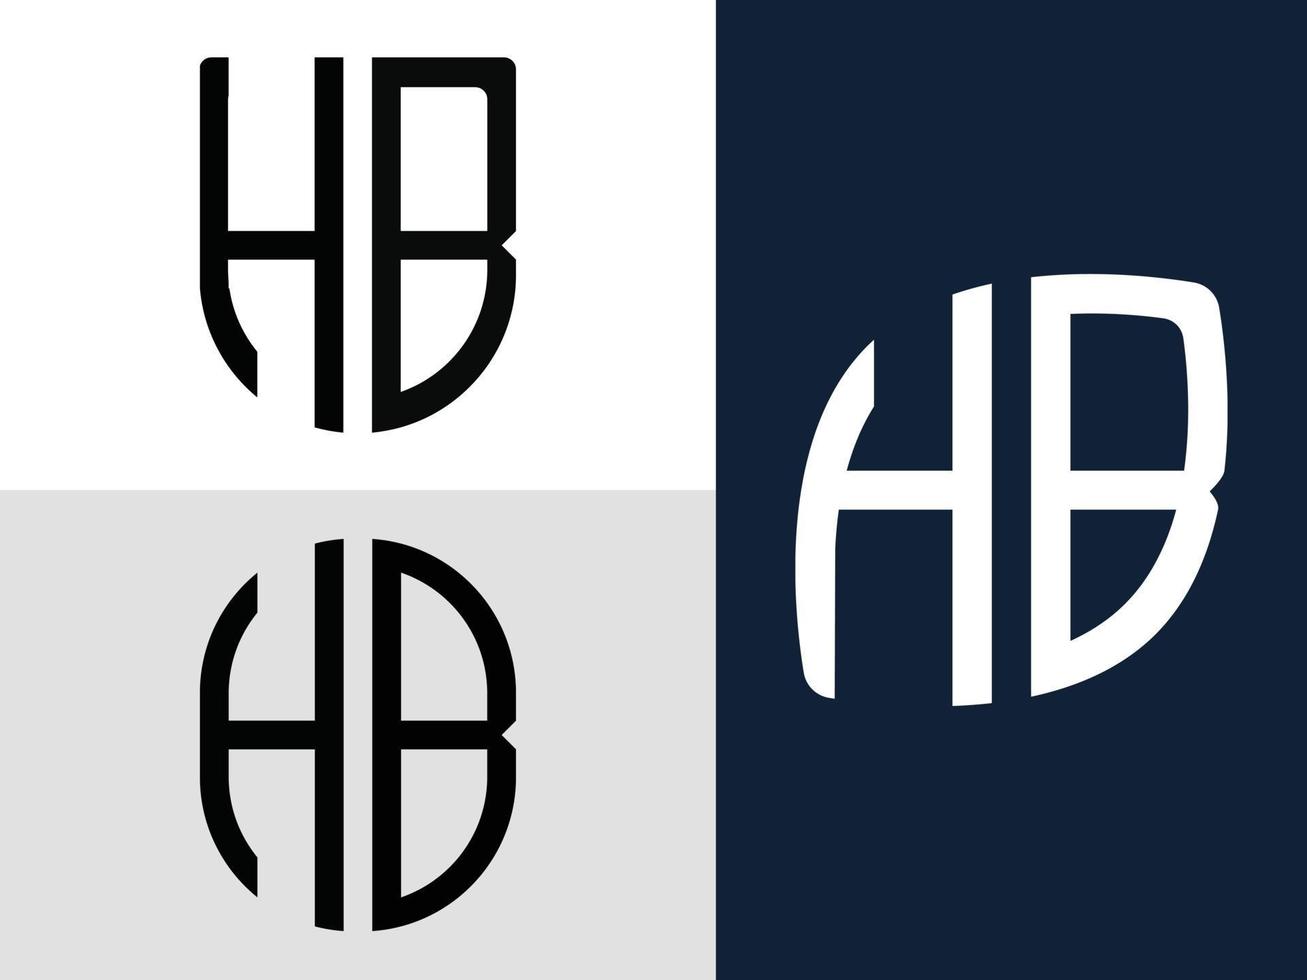 kreative anfangsbuchstaben hb logo designs paket. vektor